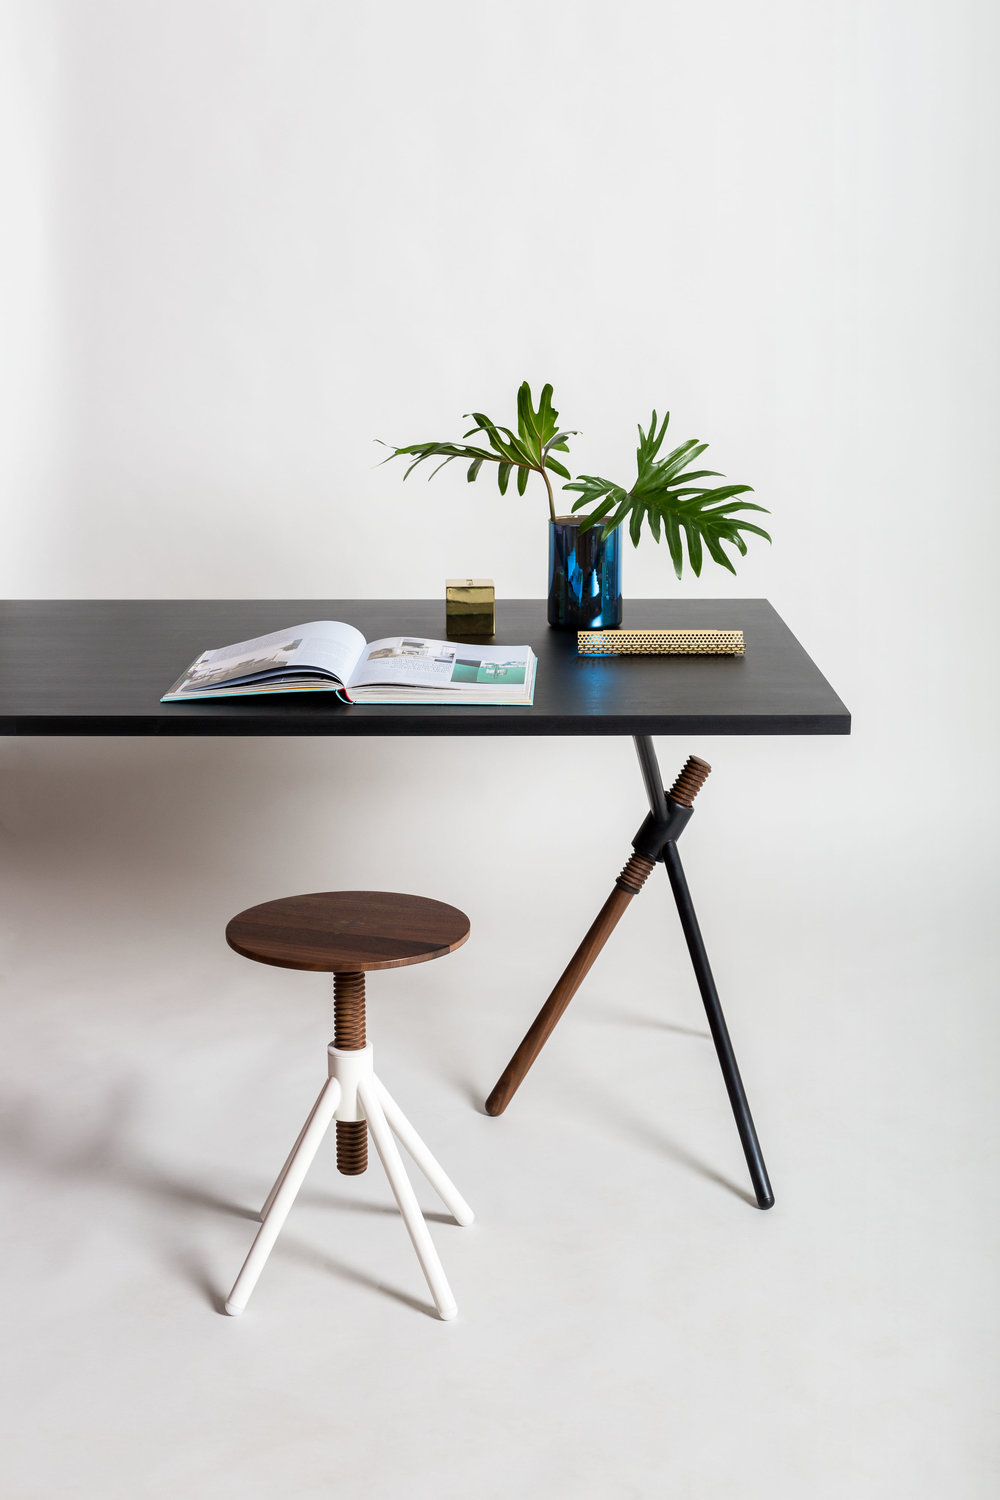 02_thread-family-table_furniture-design_coordination-berlin.jpg